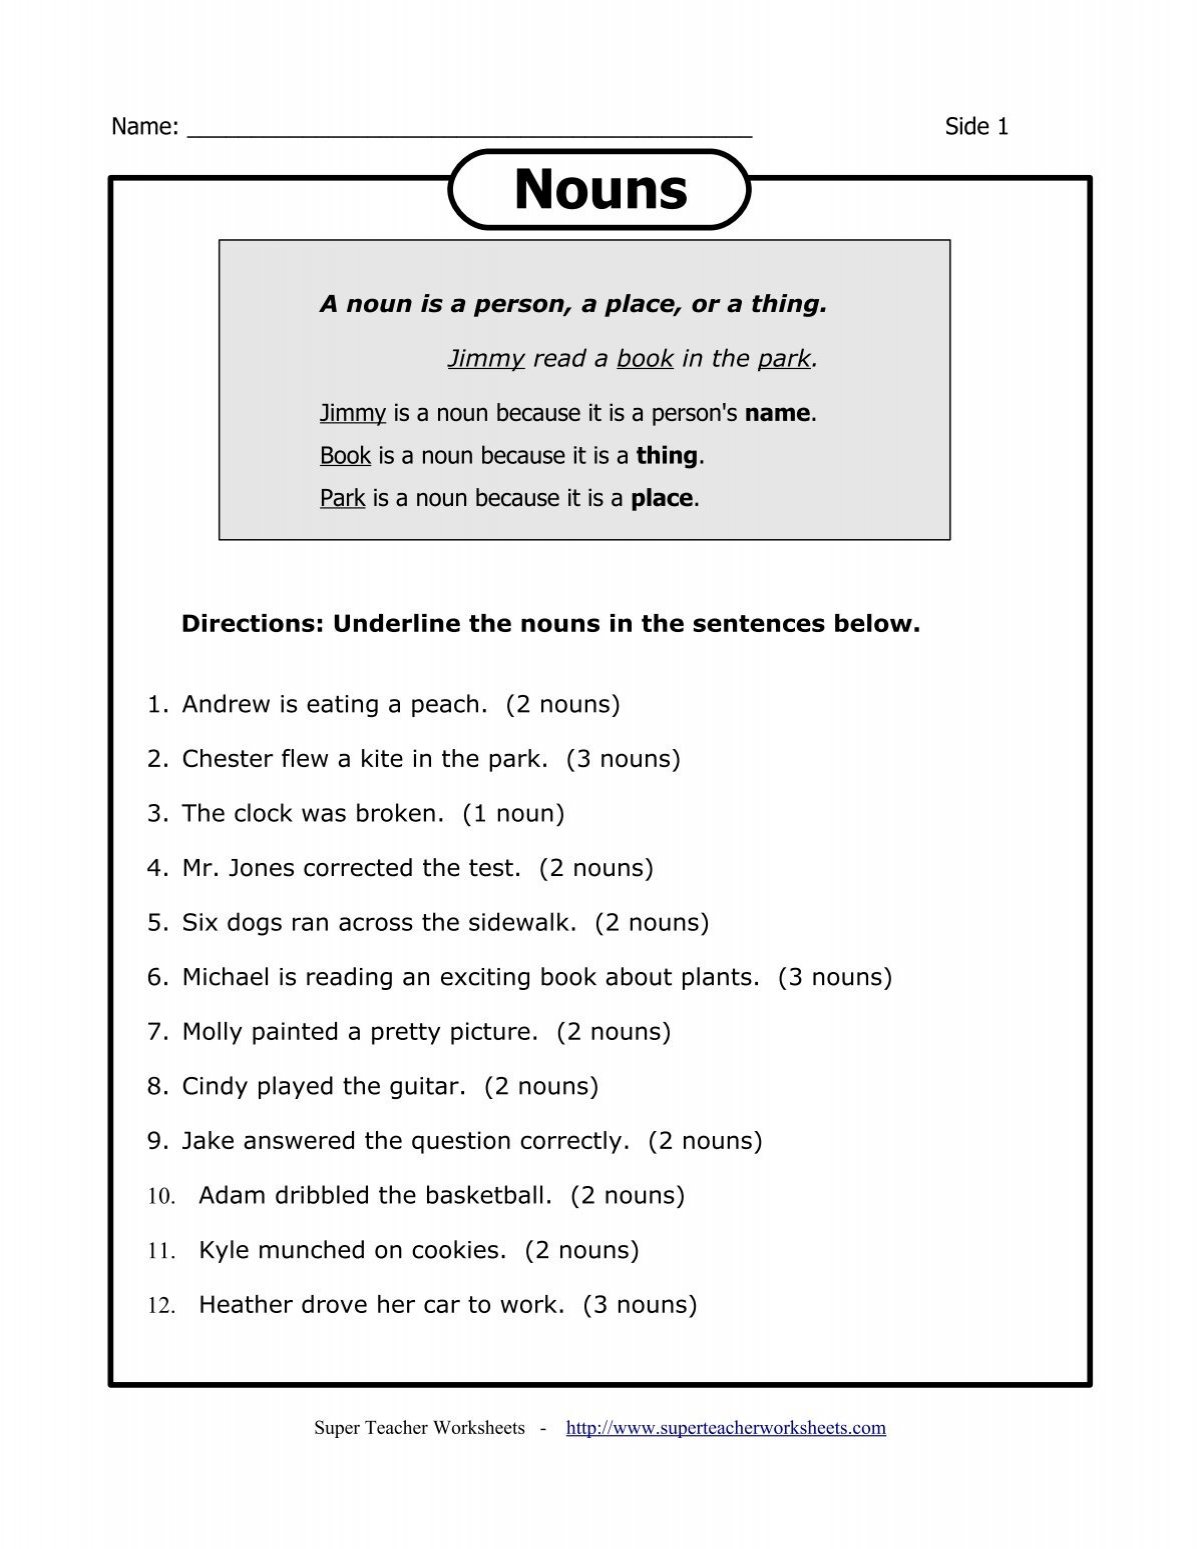 nouns-worksheet